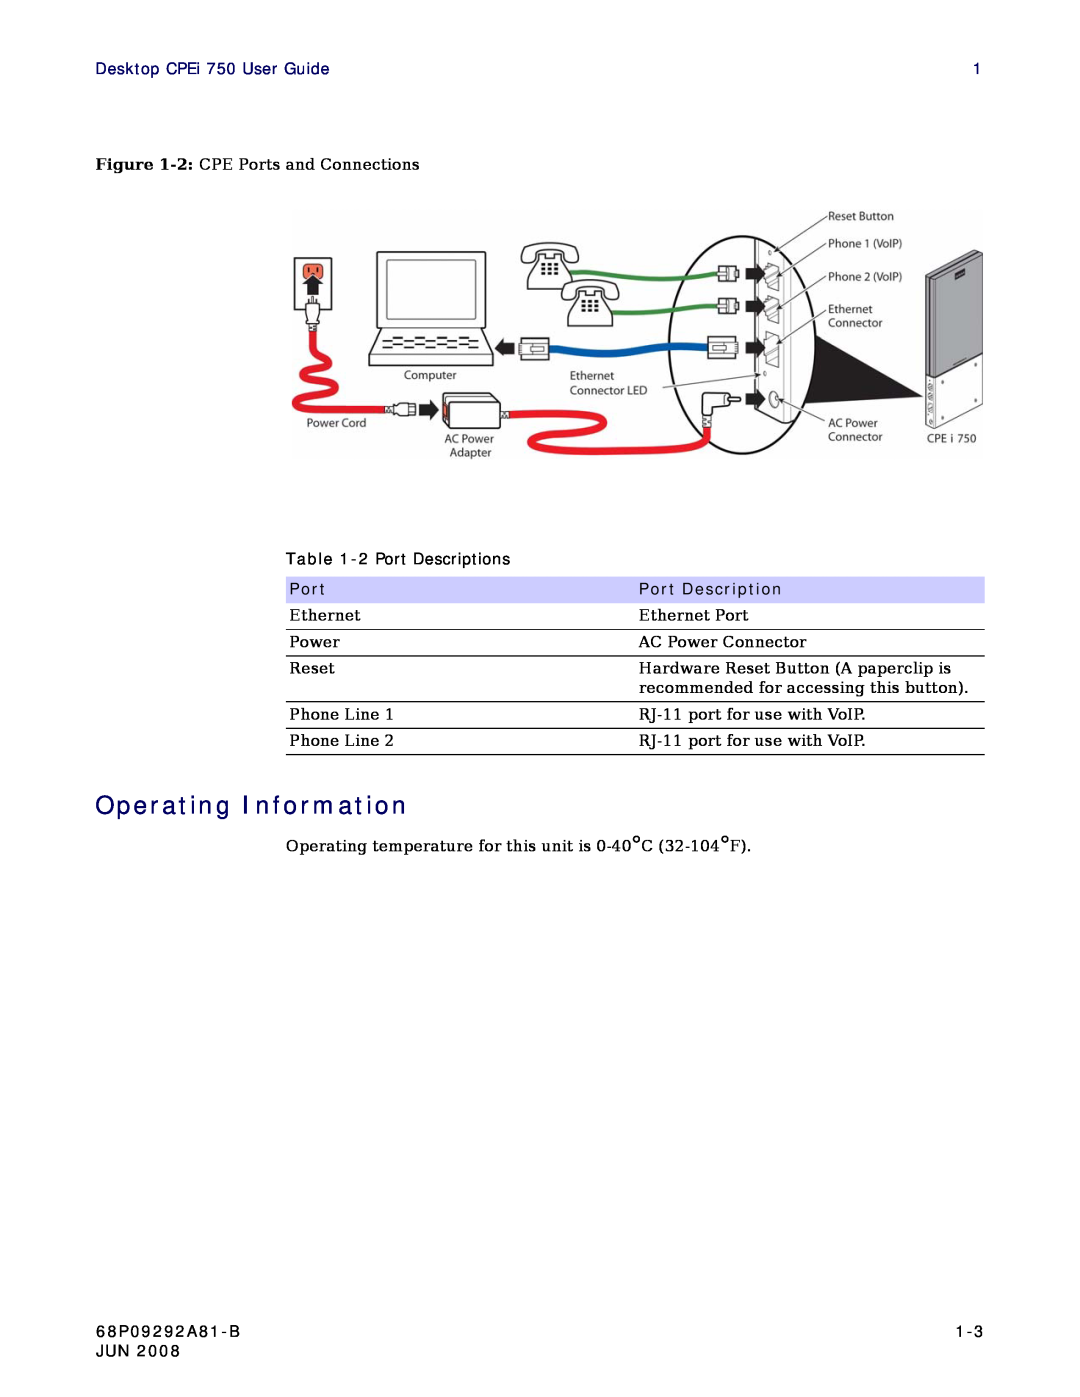 Motorola CPEI 750 manual Operating Information, Port Description, Desktop CPEi 750 User Guide, 68P09292A81-B 